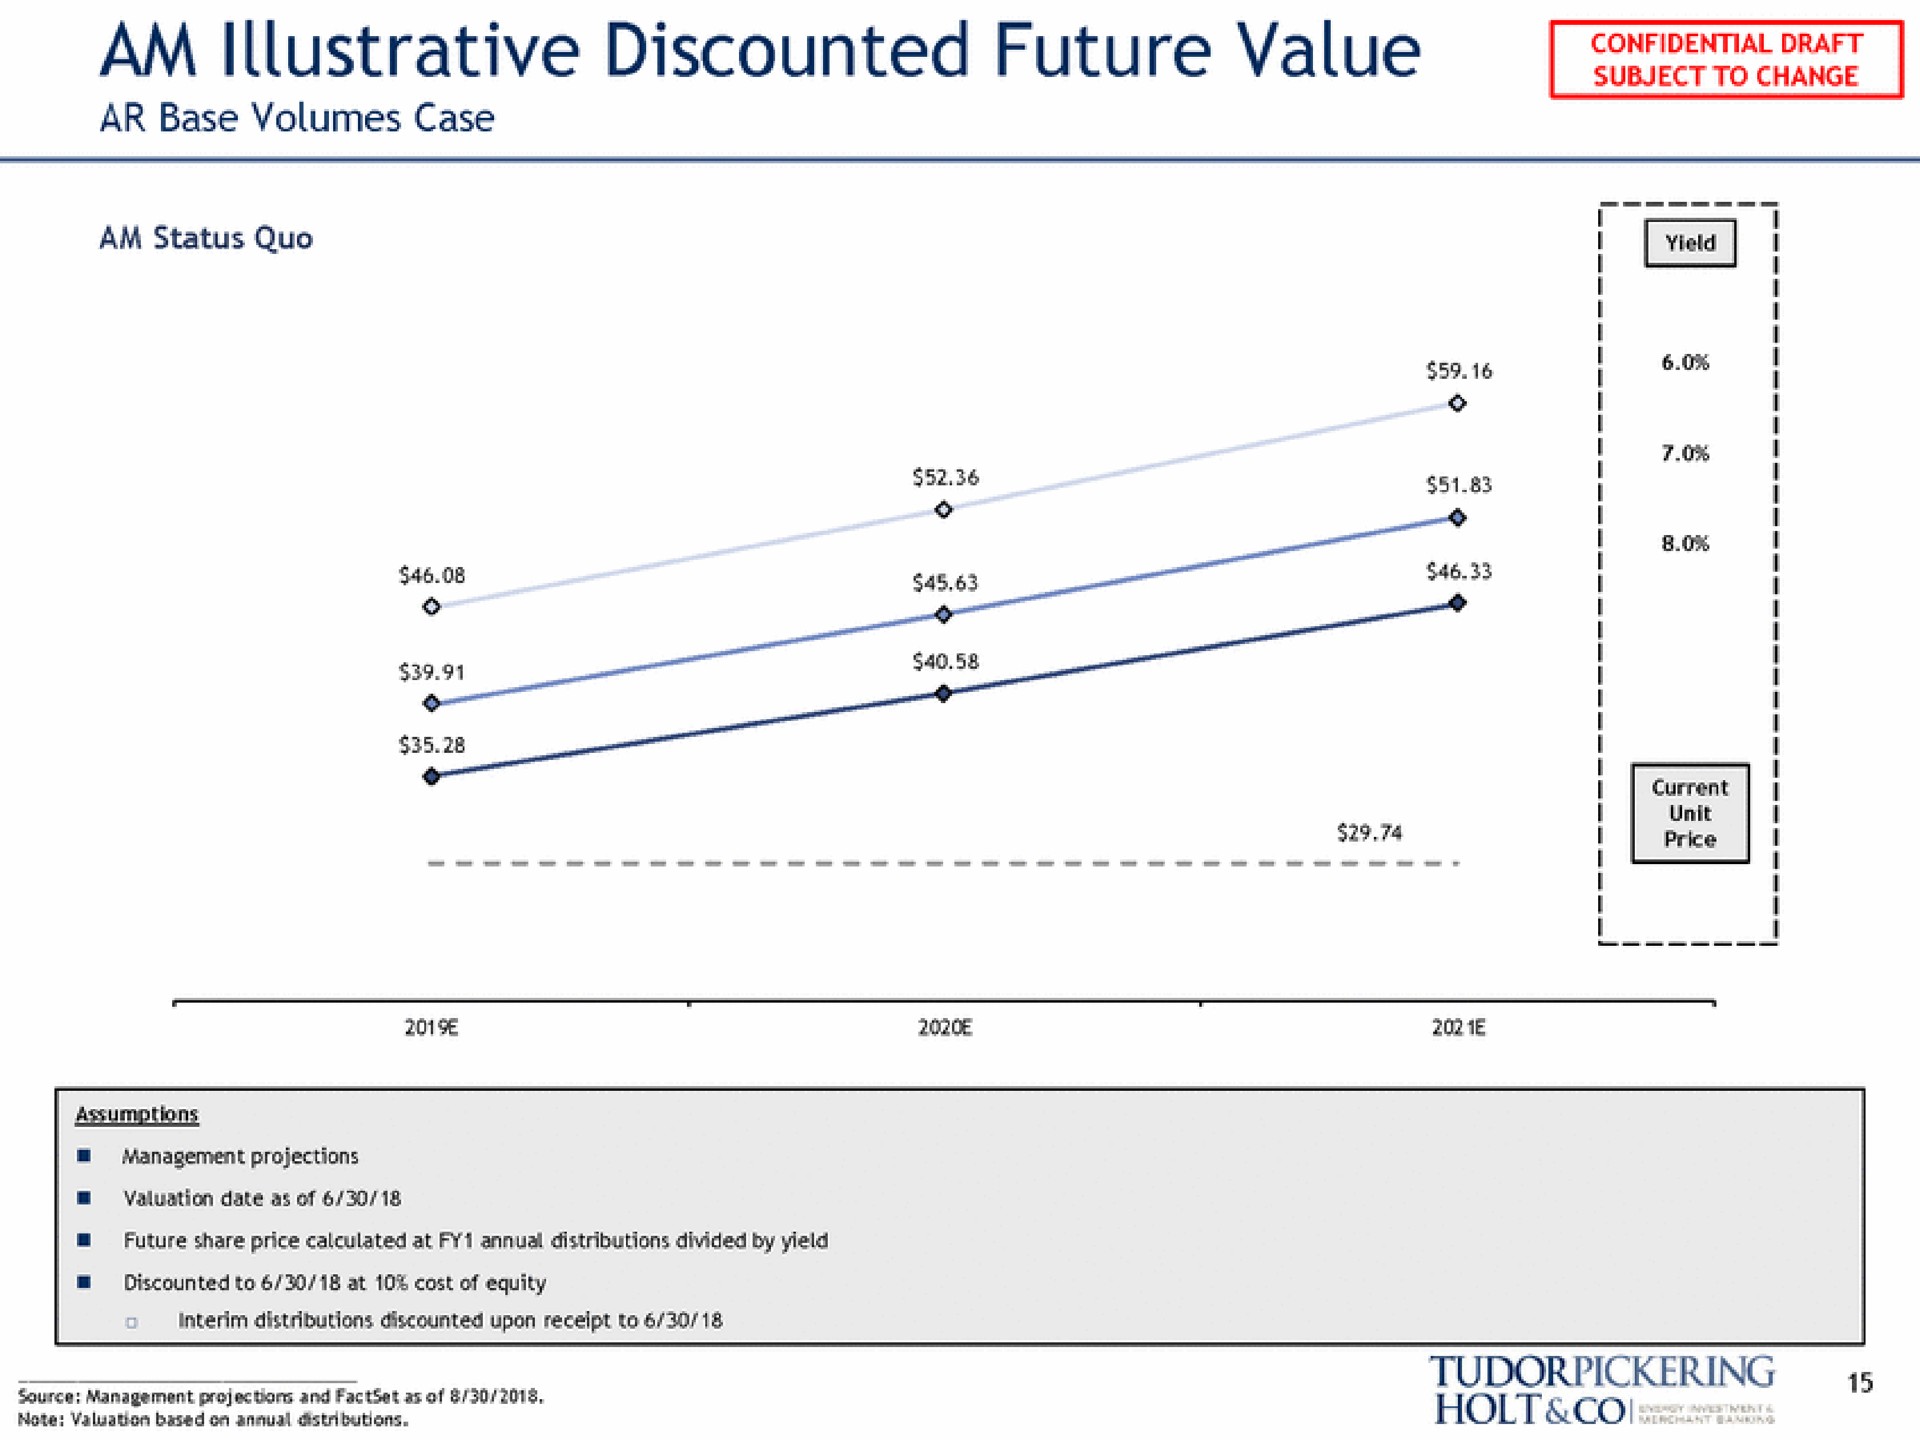 am illustrative discounted future value | Tudor, Pickering, Holt & Co